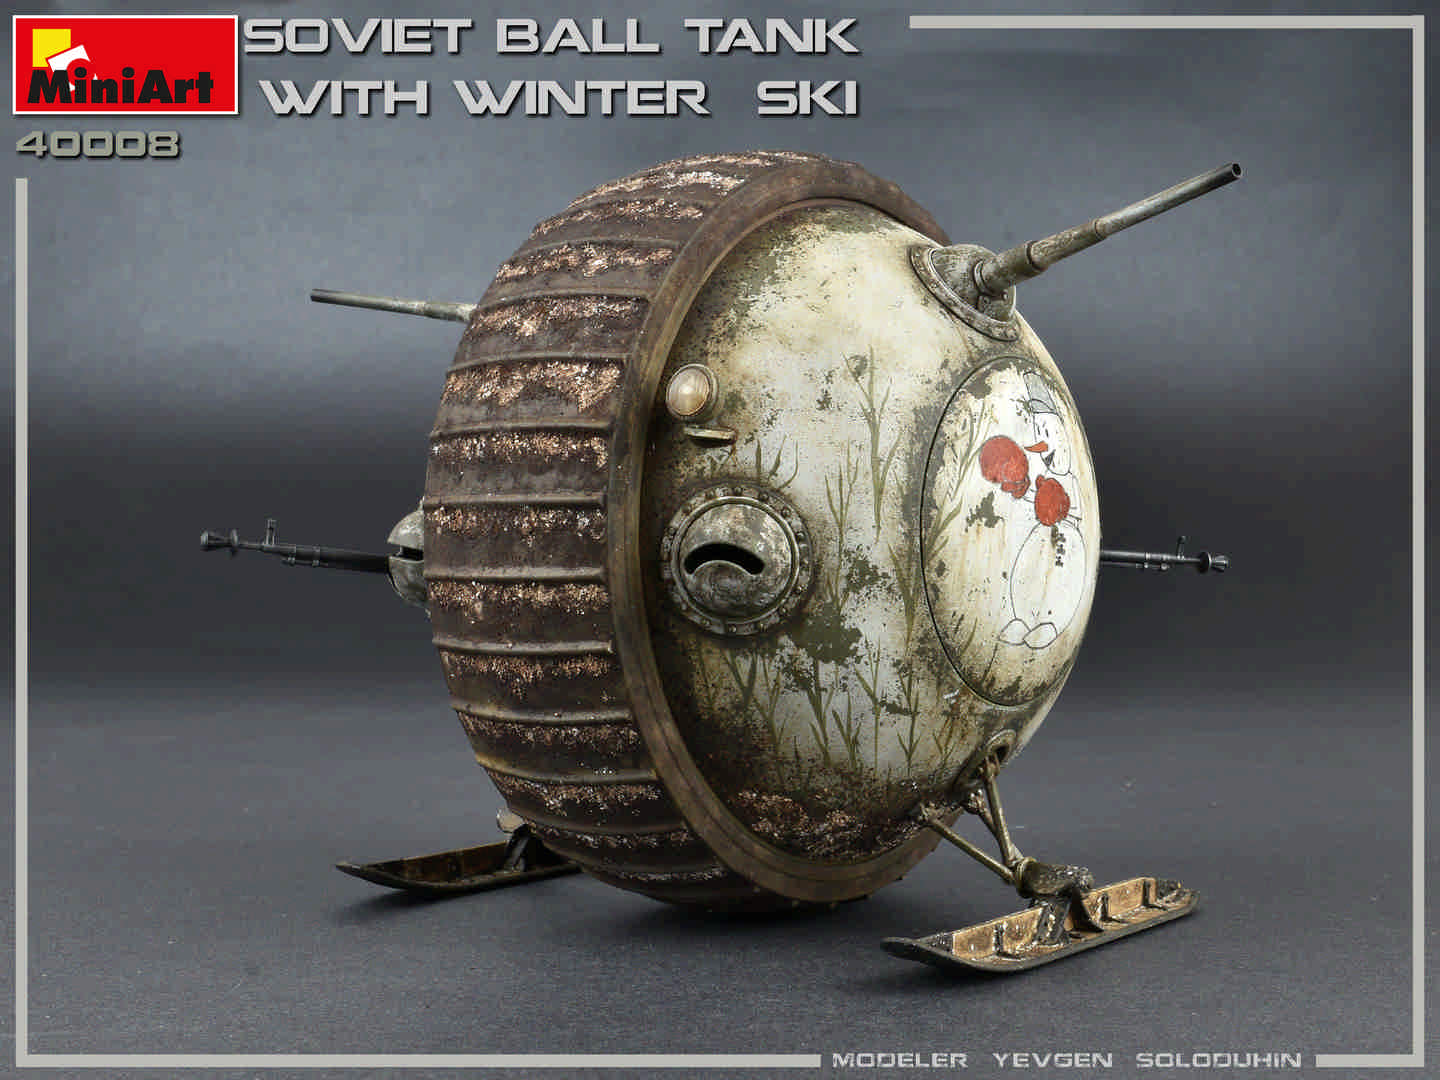 Miniart 1:35 Soviet Ball Tank with Winter Ski 40008